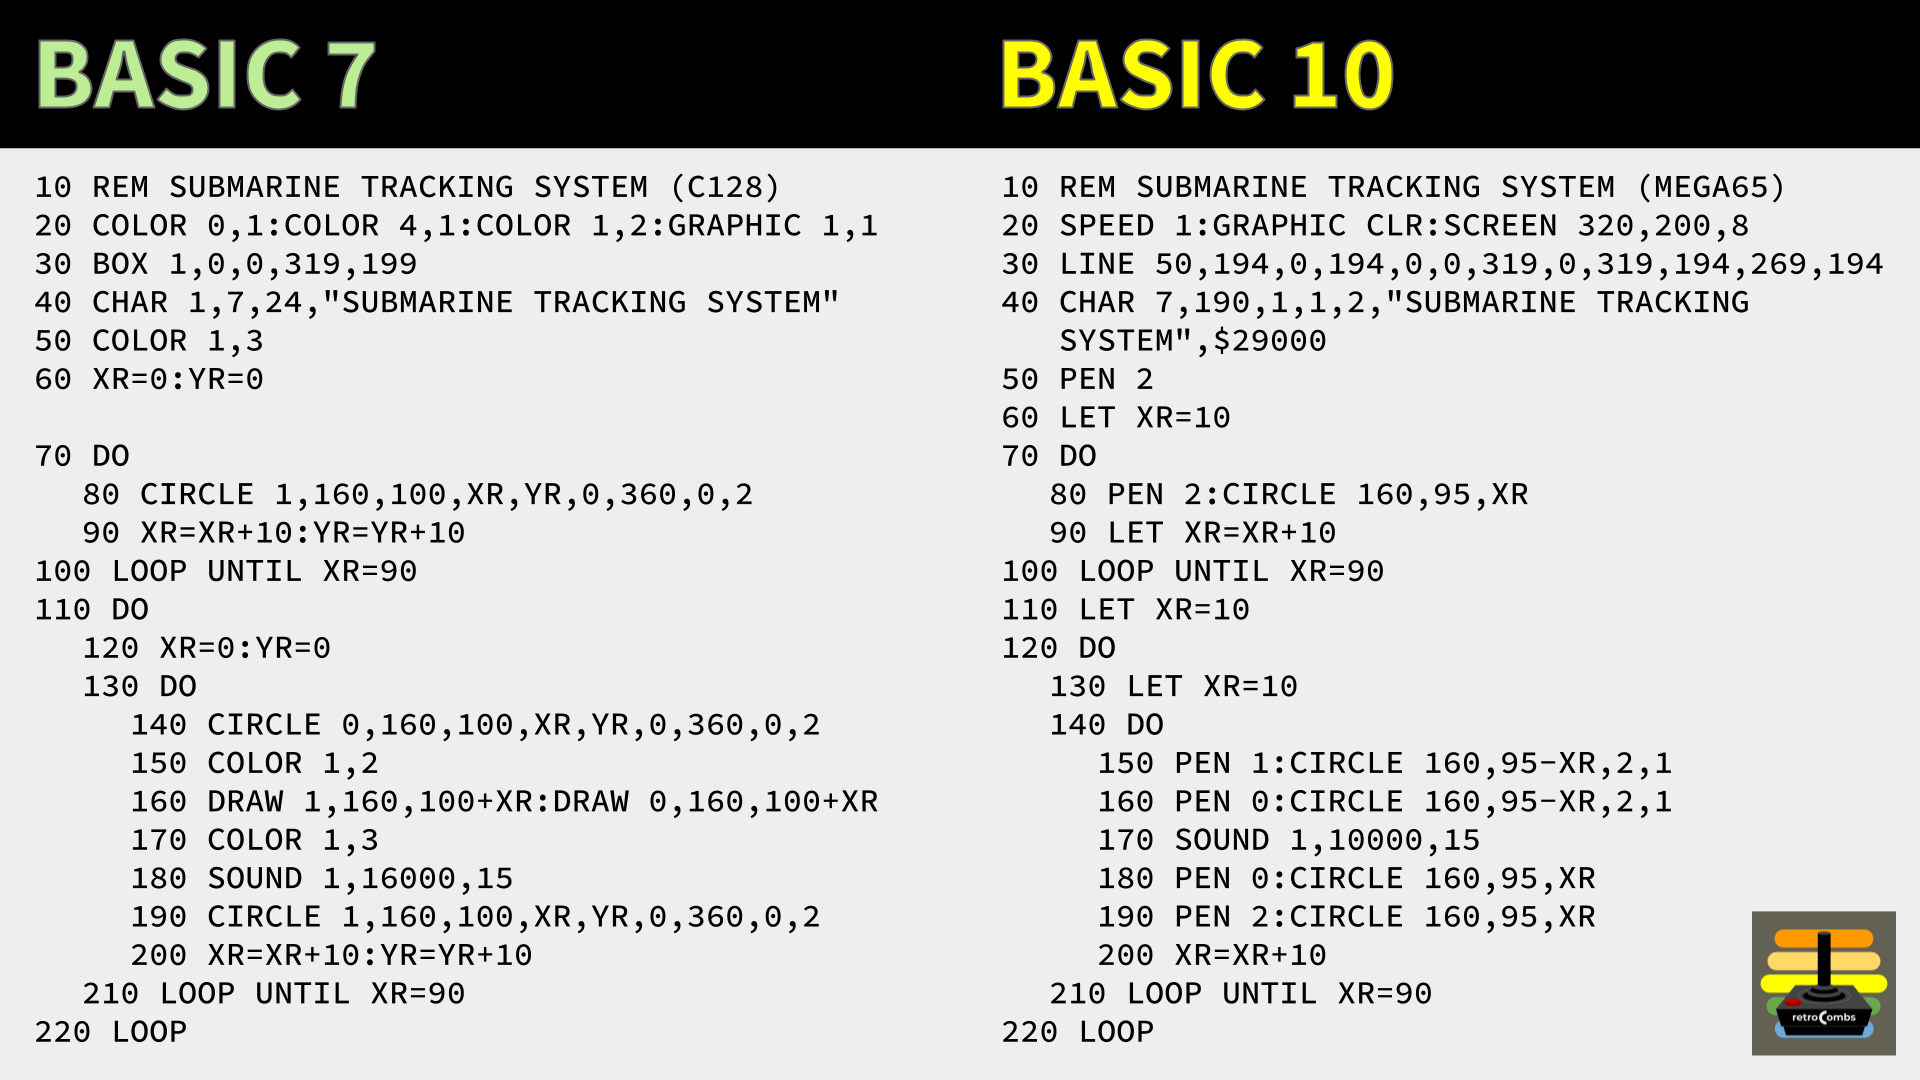 Compare the C128 and MEGA65 versions